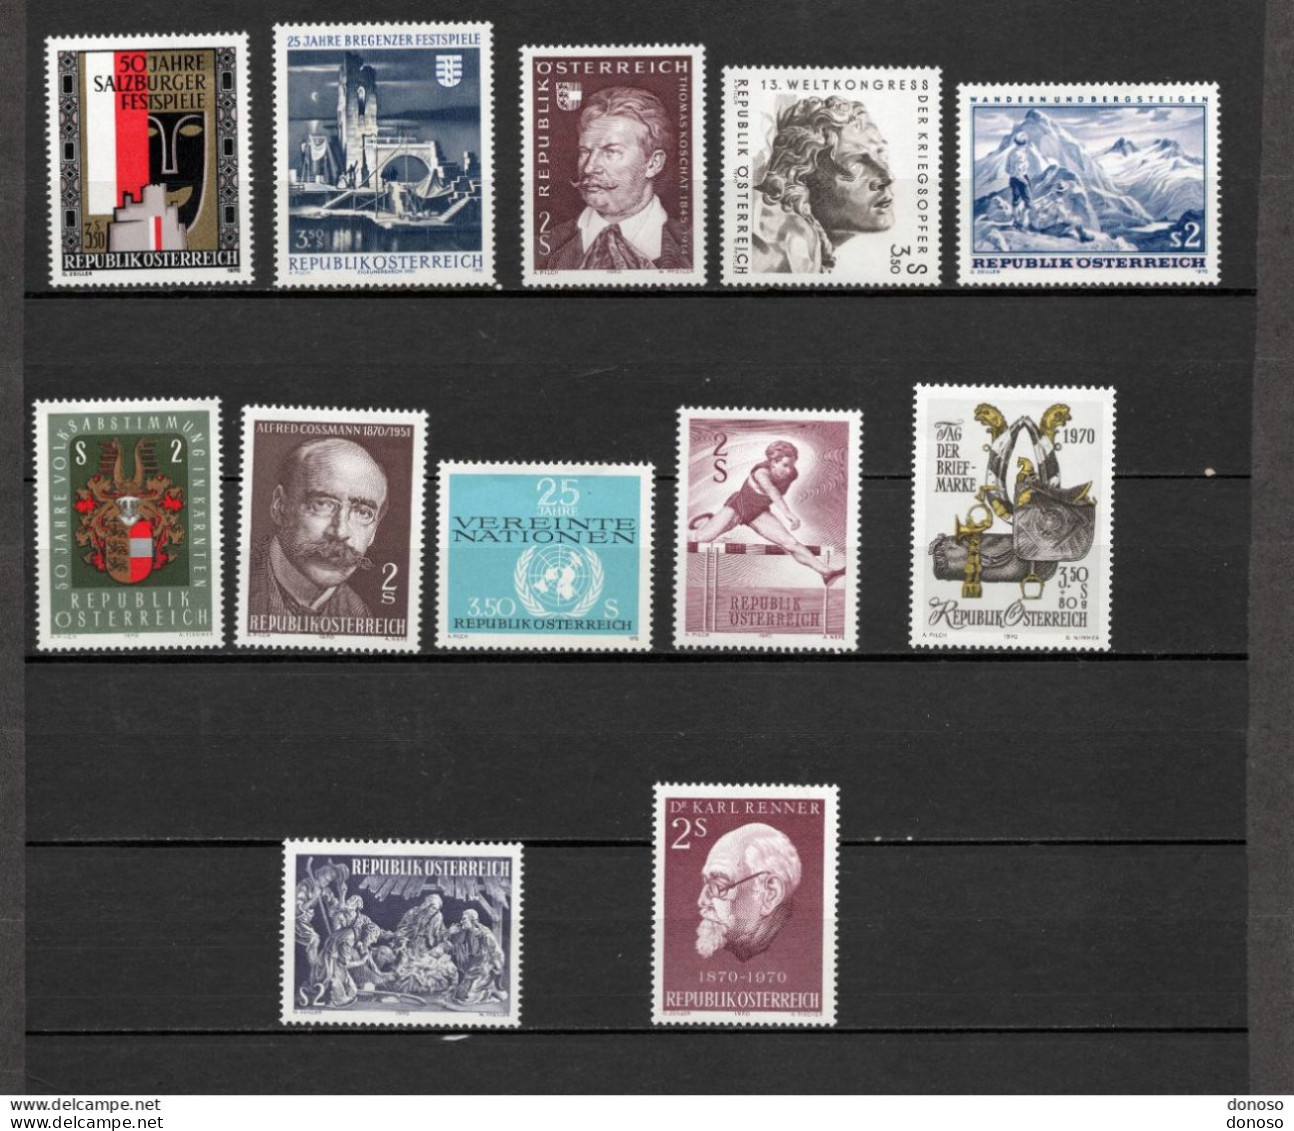 AUTRICHE 1970 Yvert 1163-1166 + 1170-1172 + 1176-1180 NEUF** MNH Cote 10 Euros - Unused Stamps